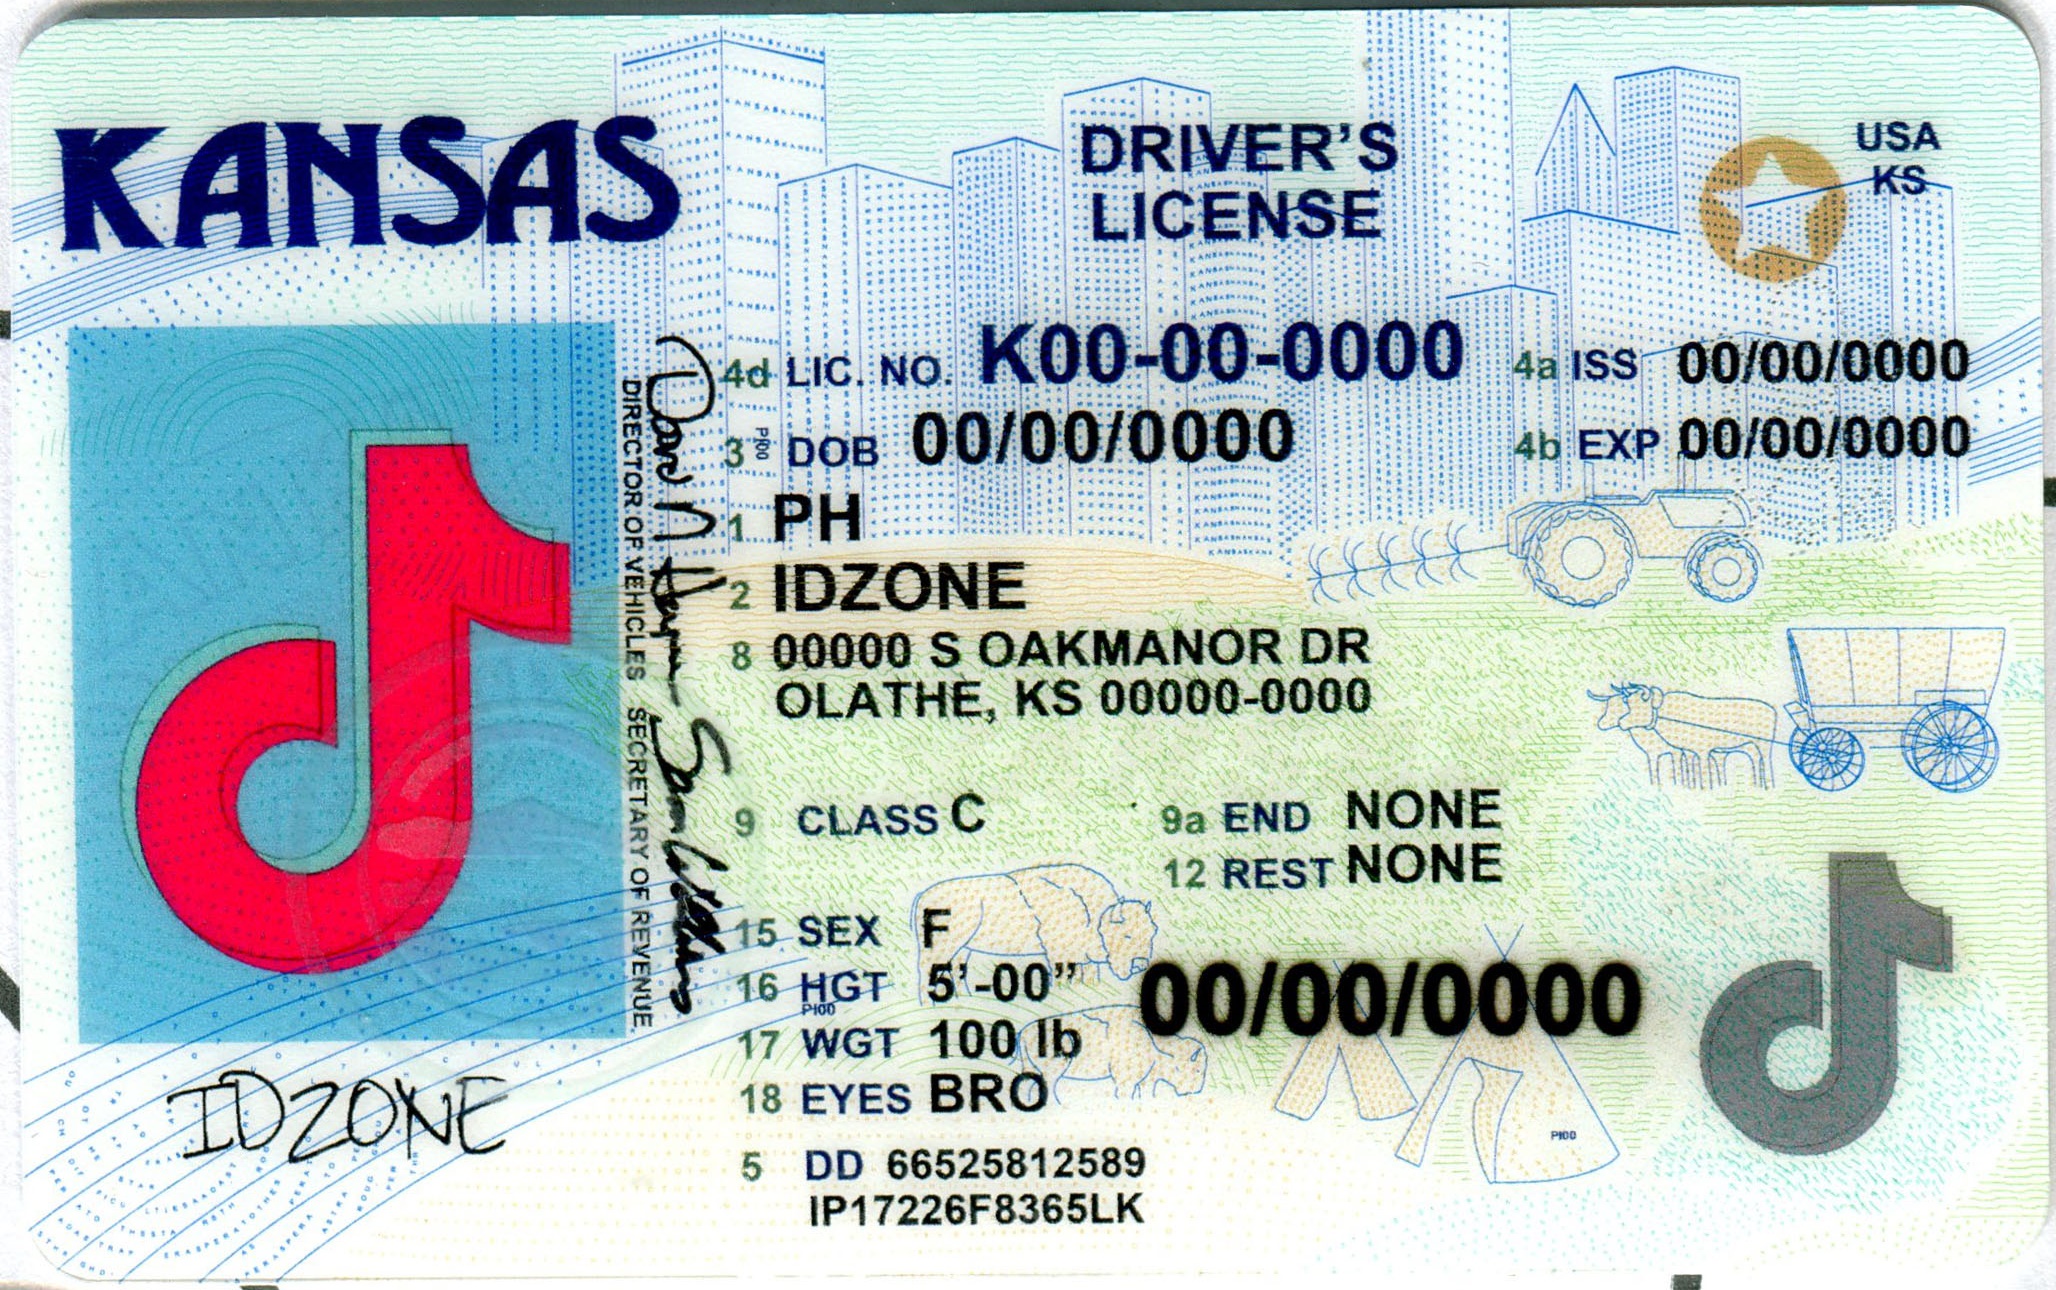 KANSAS-New Scannable fake id